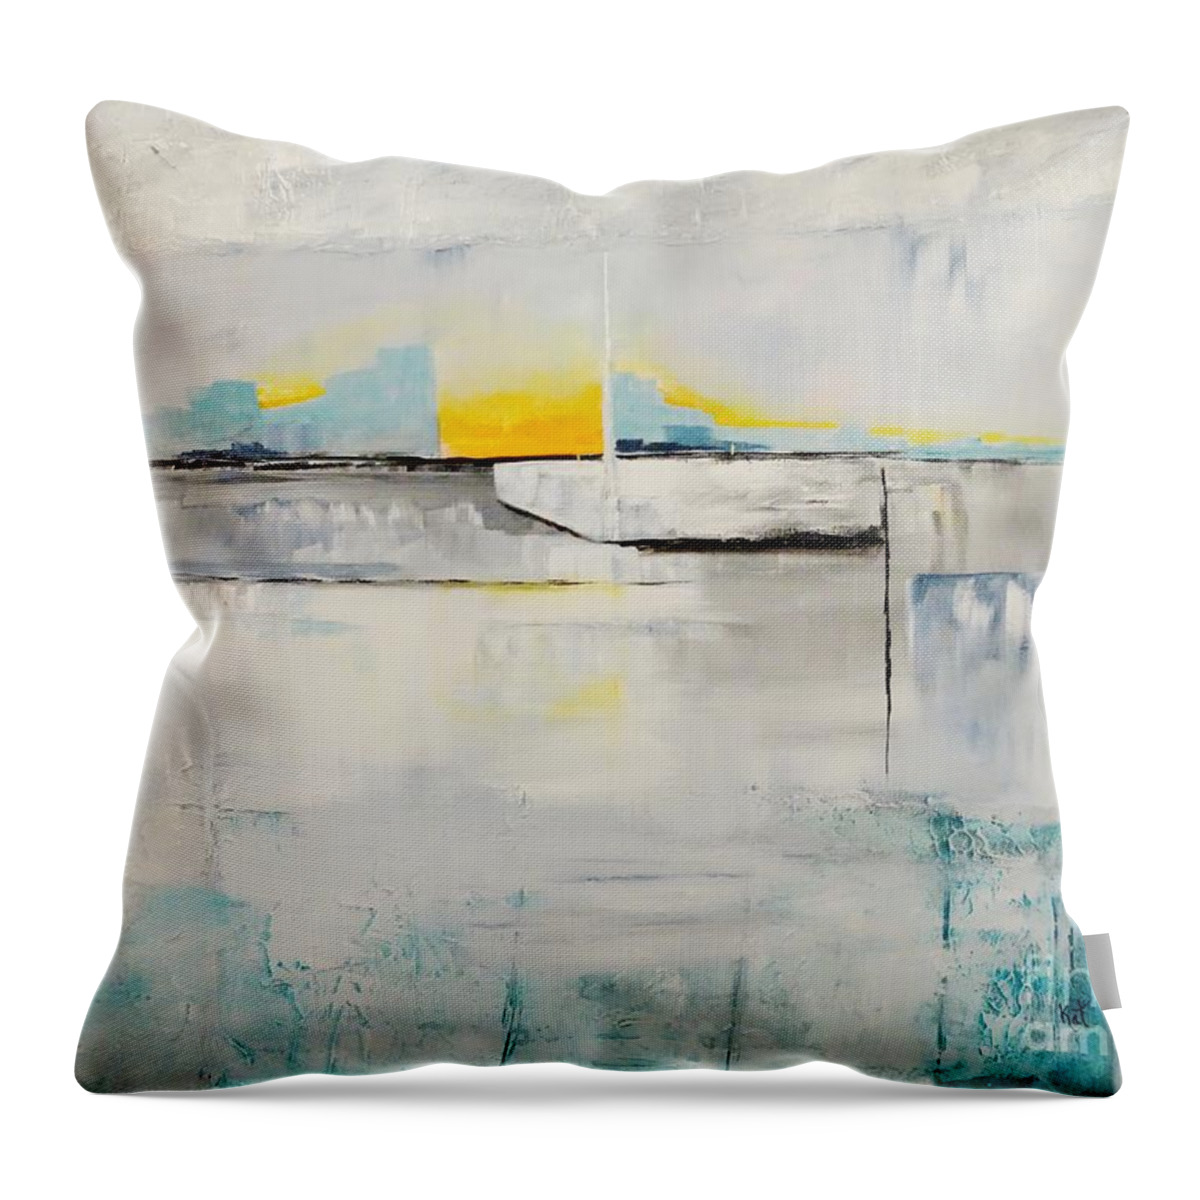 Horizon Throw Pillow featuring the painting Horizon by Kat McClure